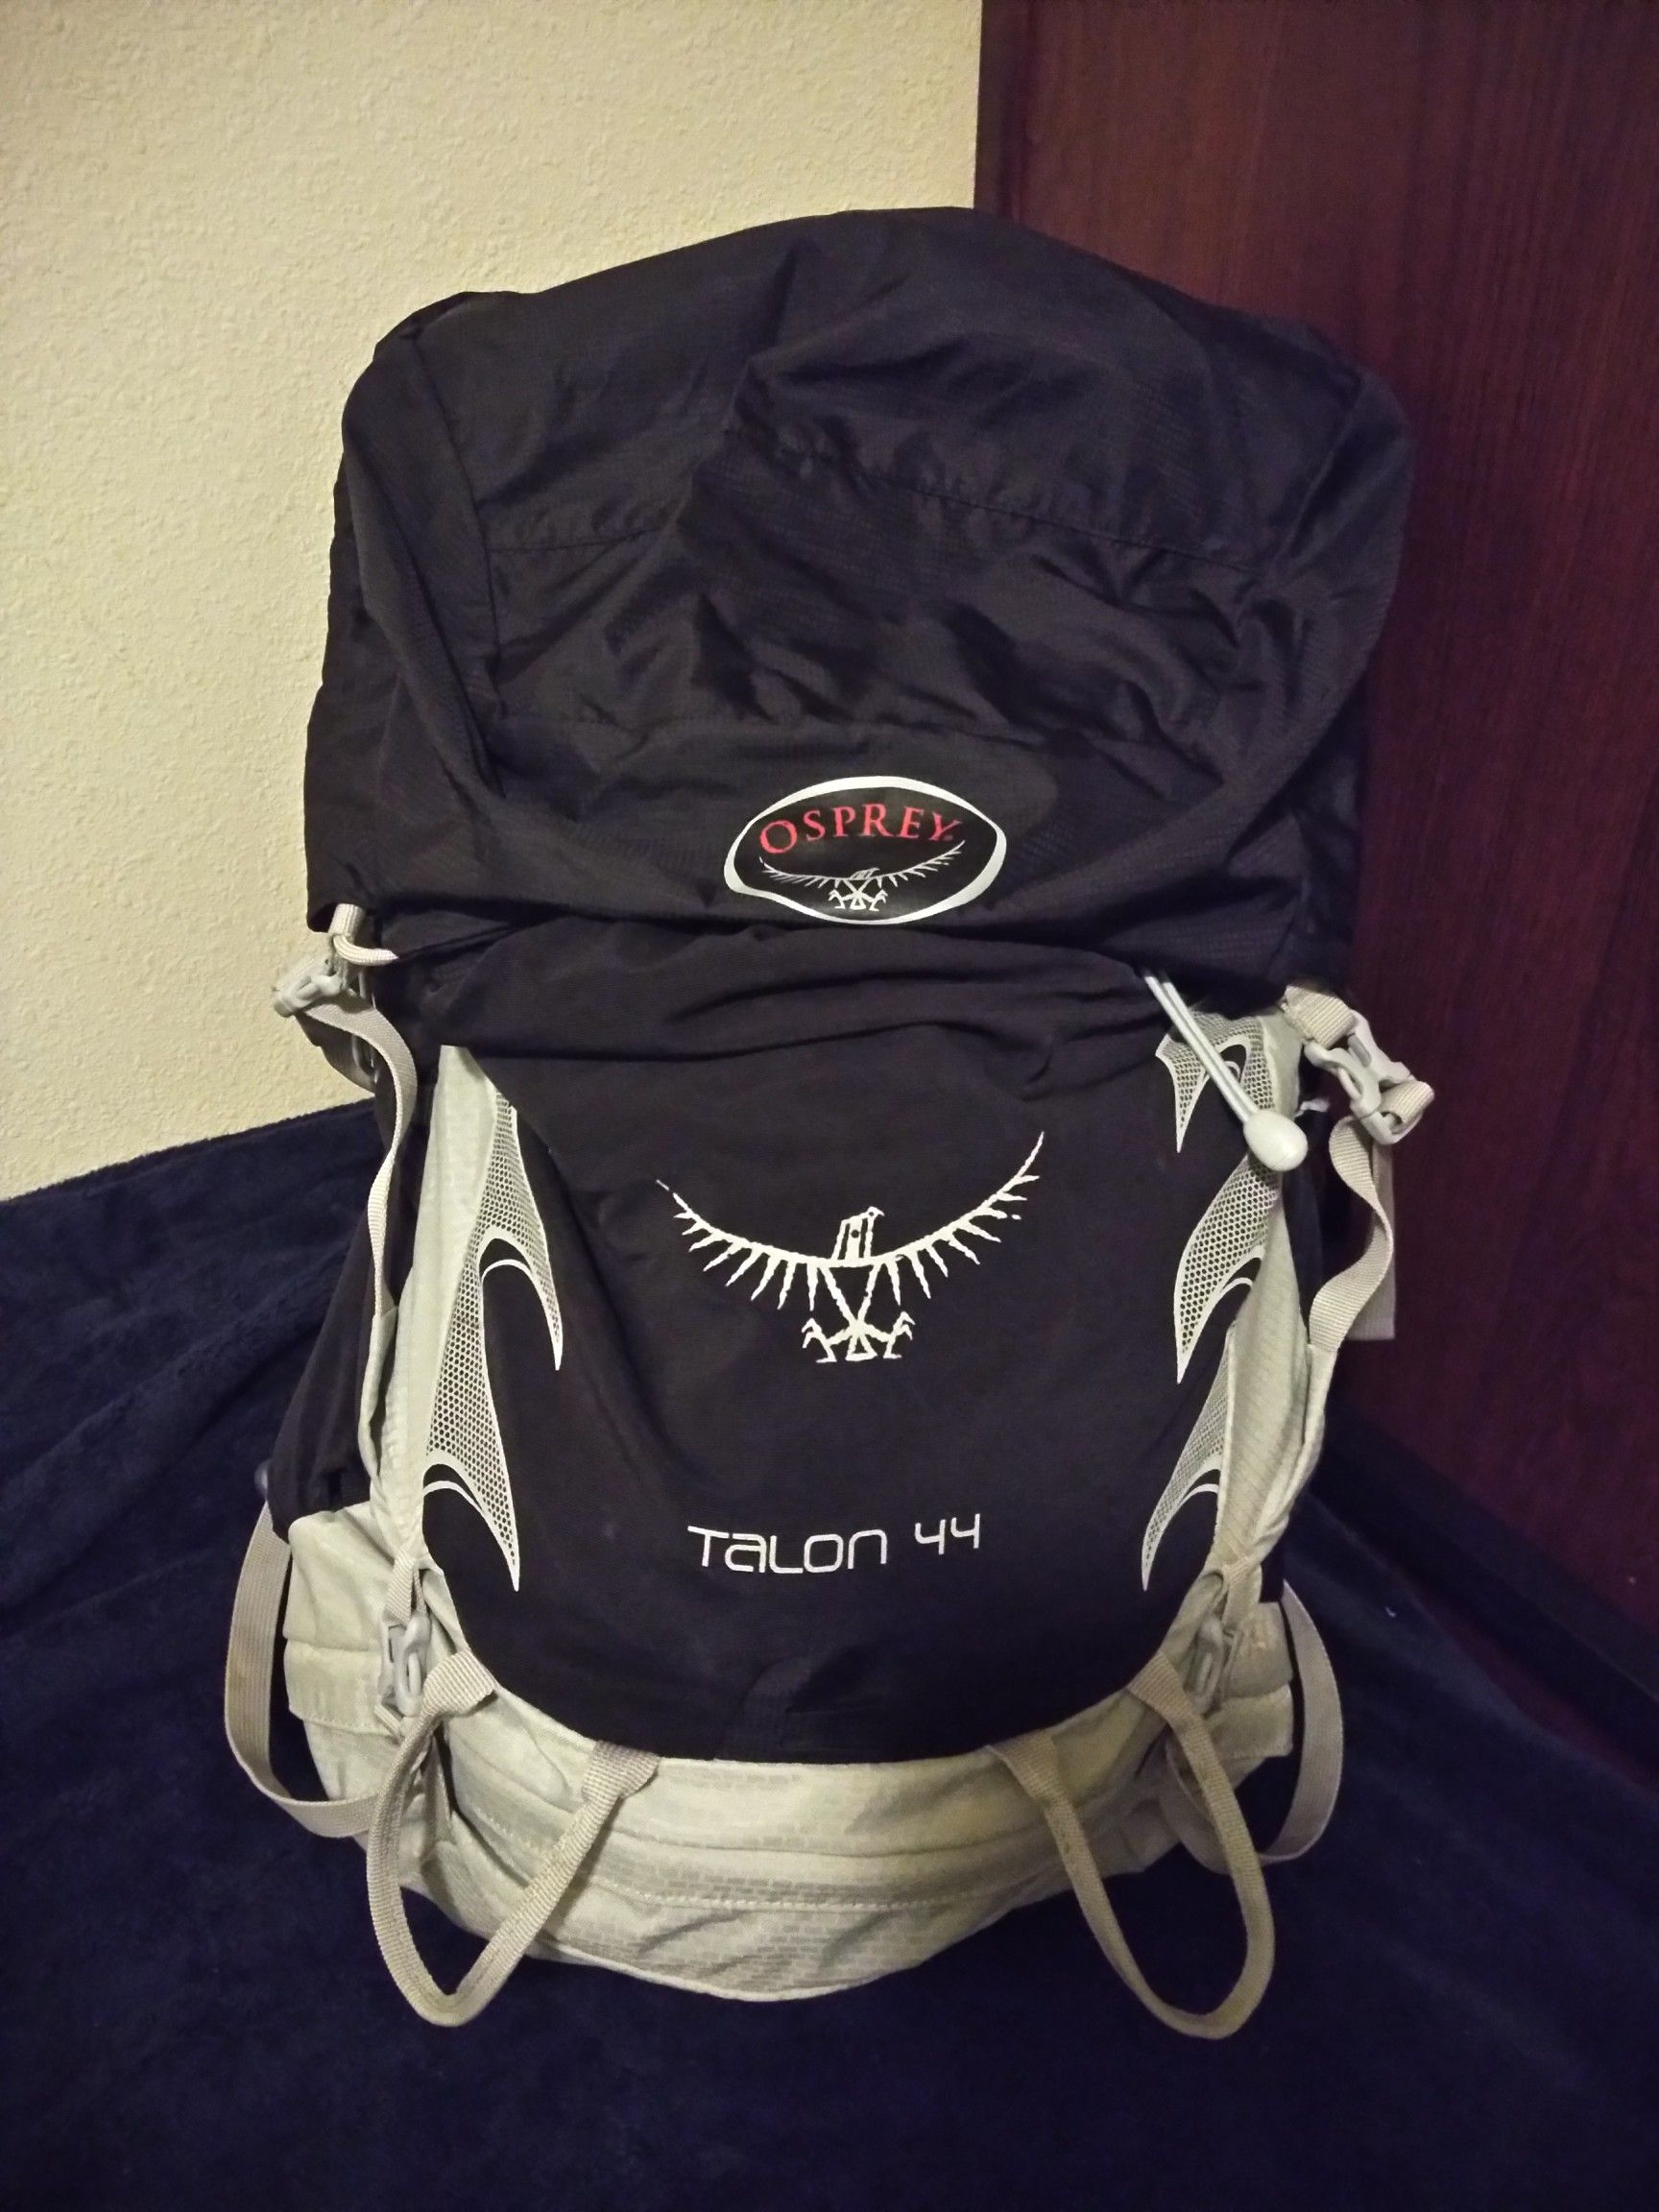 Osprey Talon 44 hiking/camping backpack